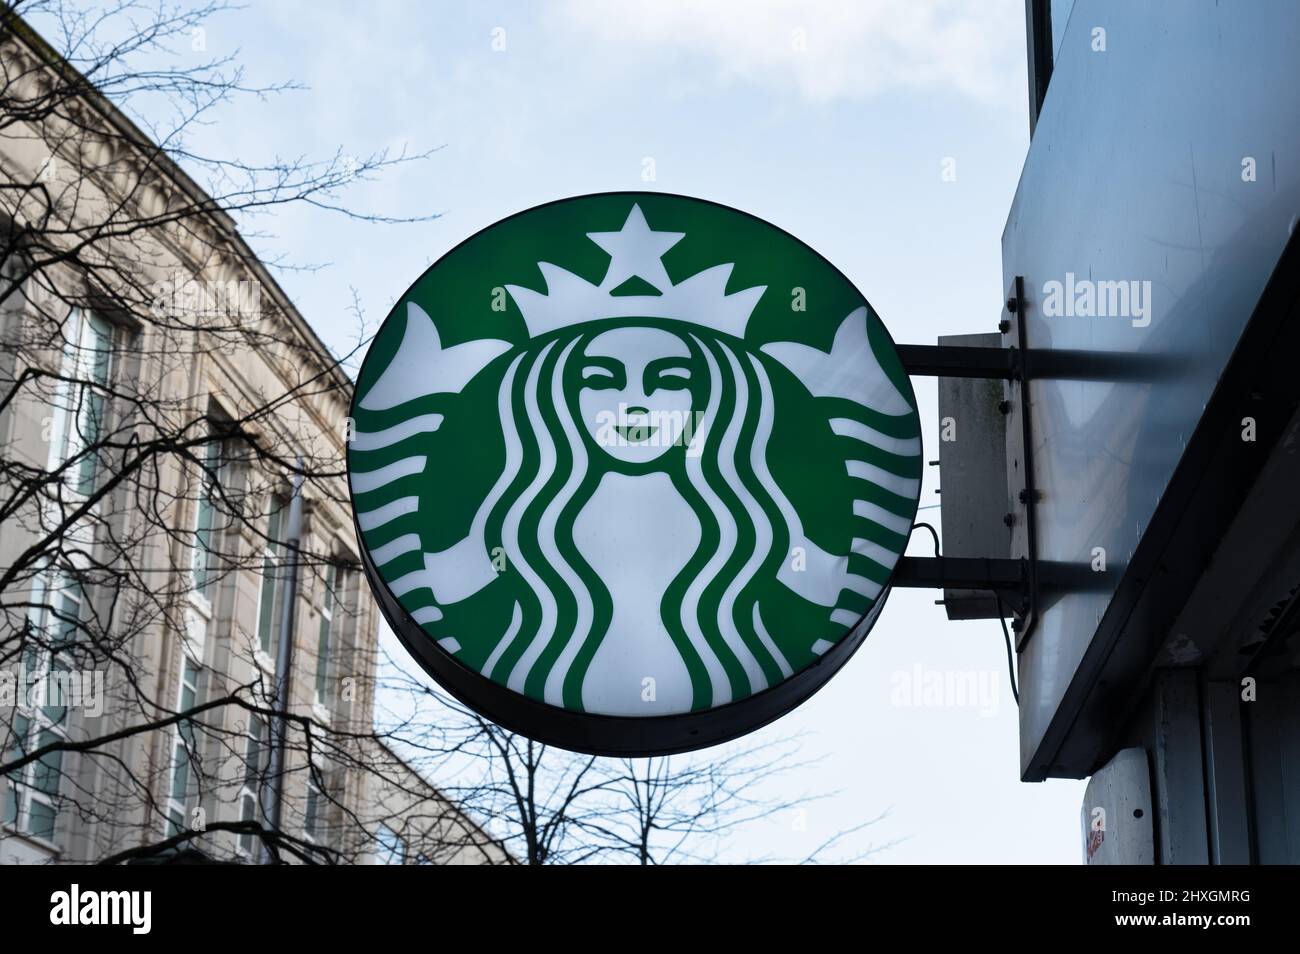 Belfast, UK- Feb 19, 2022: The Starbucks sign in Belfast Northern Ireland. Stock Photo